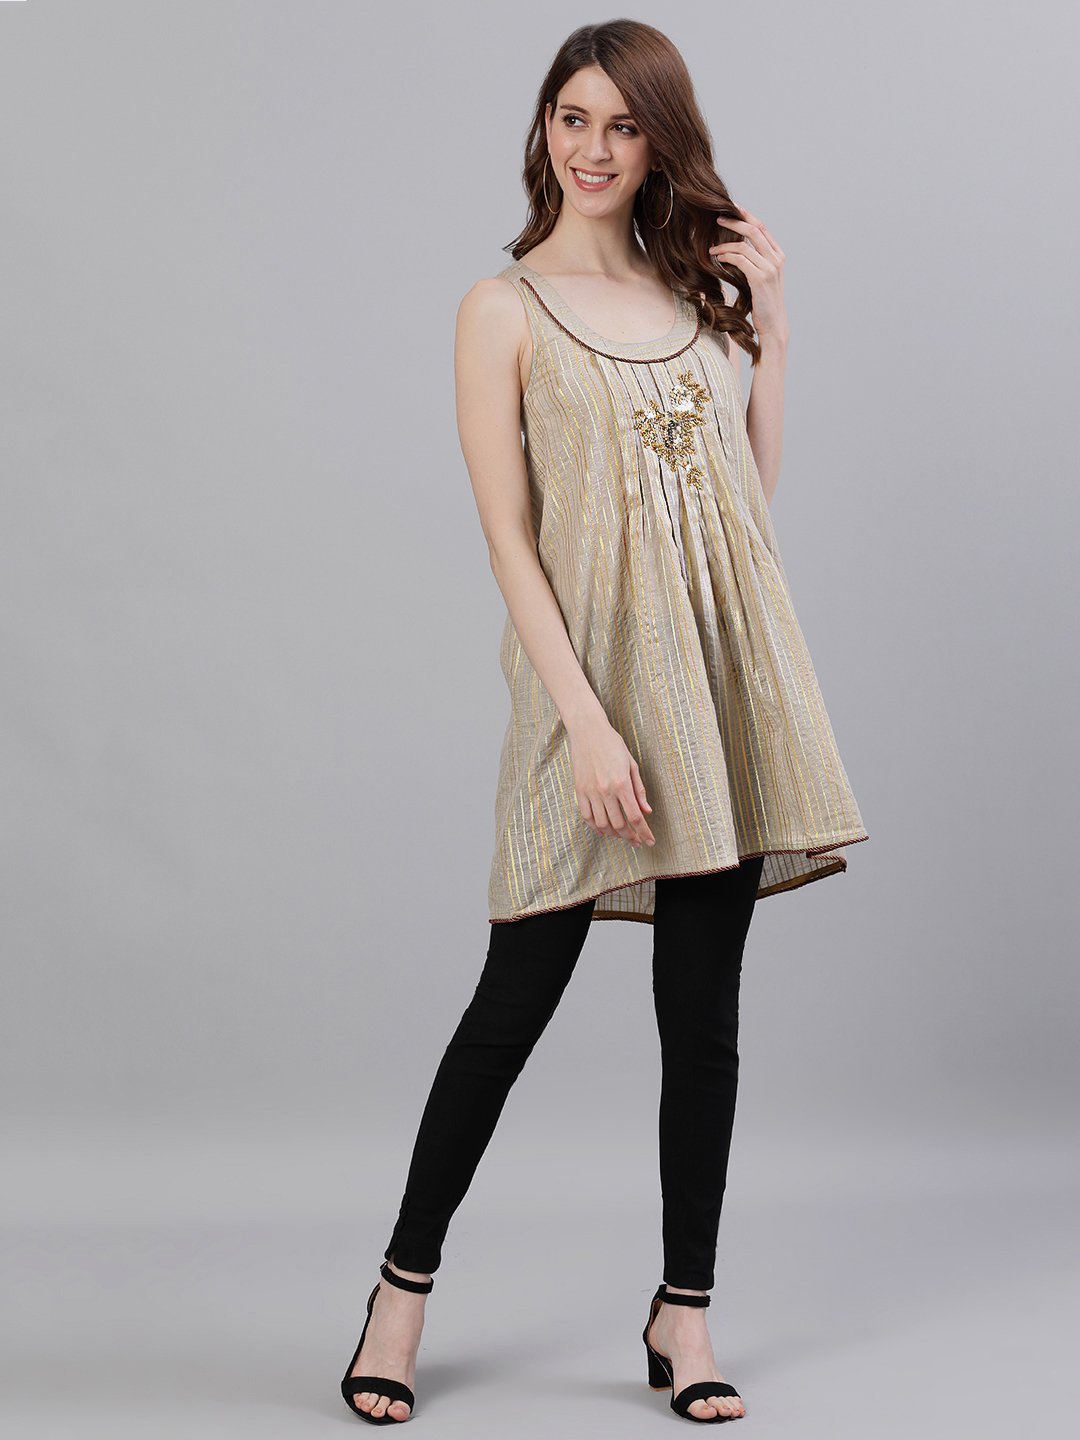 Ishin Women's Cotton Beige Lurex Embellished Style Back Top